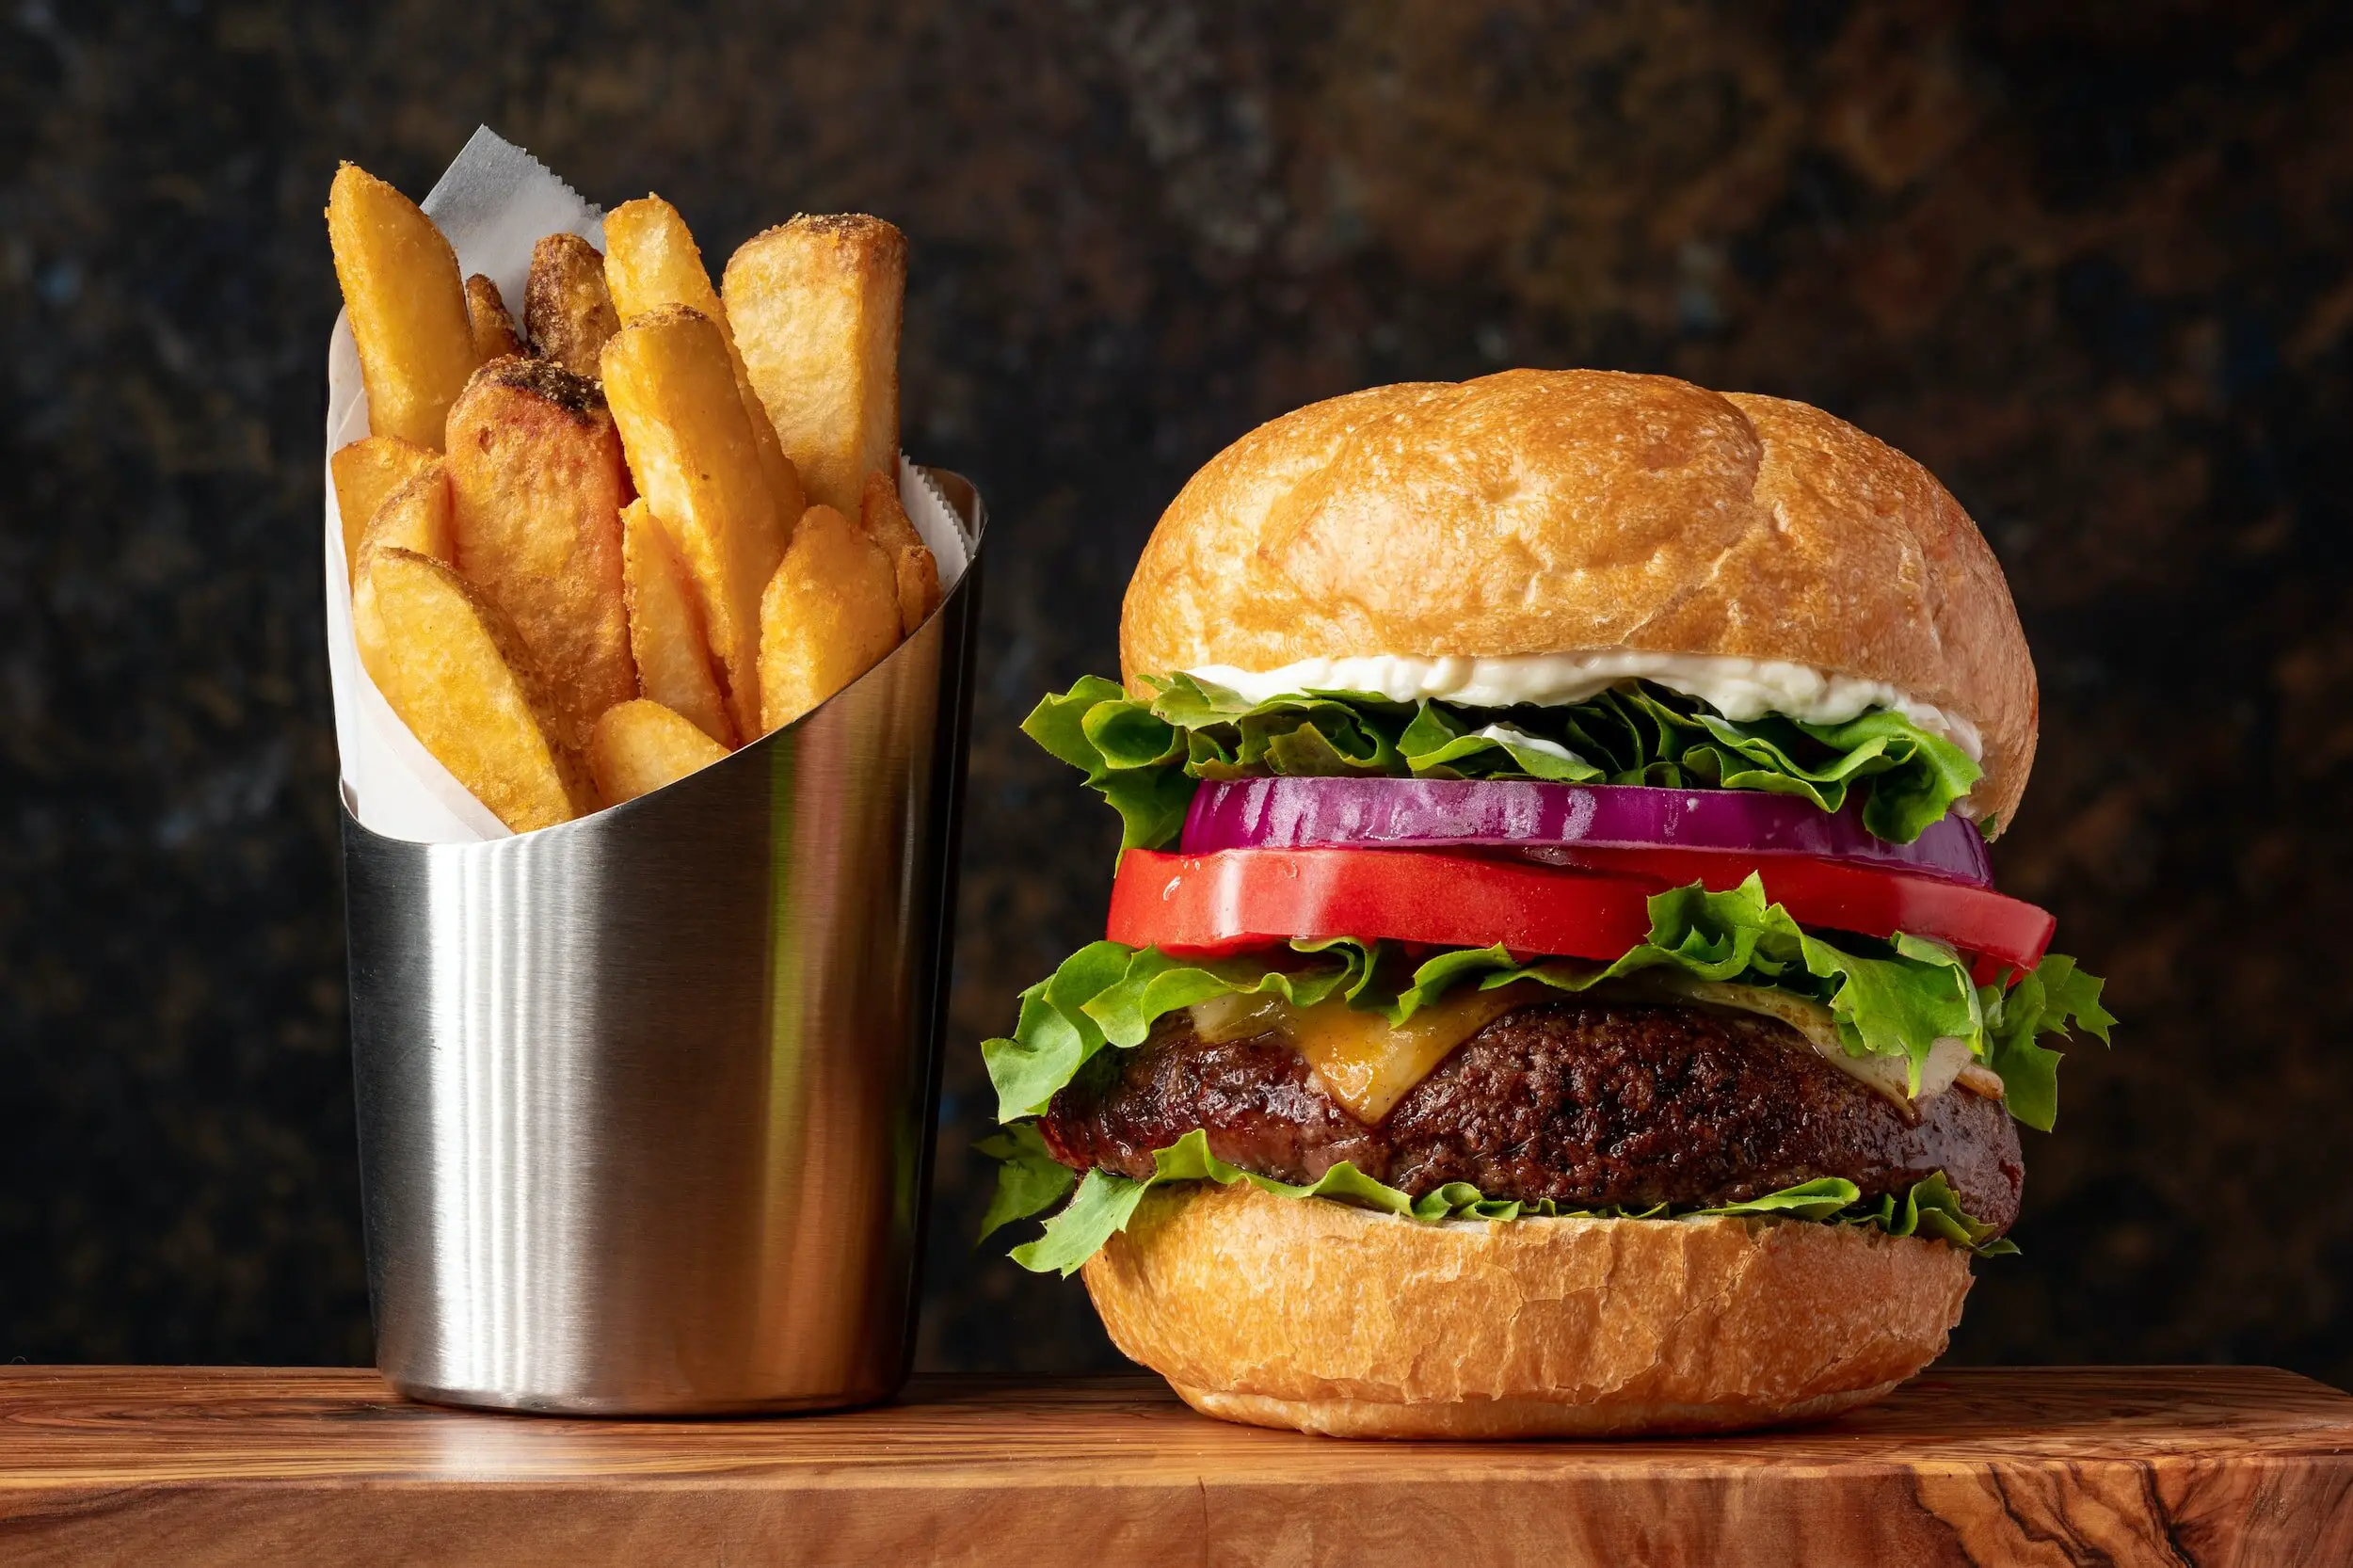 merlot vs mablec - malbec pairing hamburger and fries